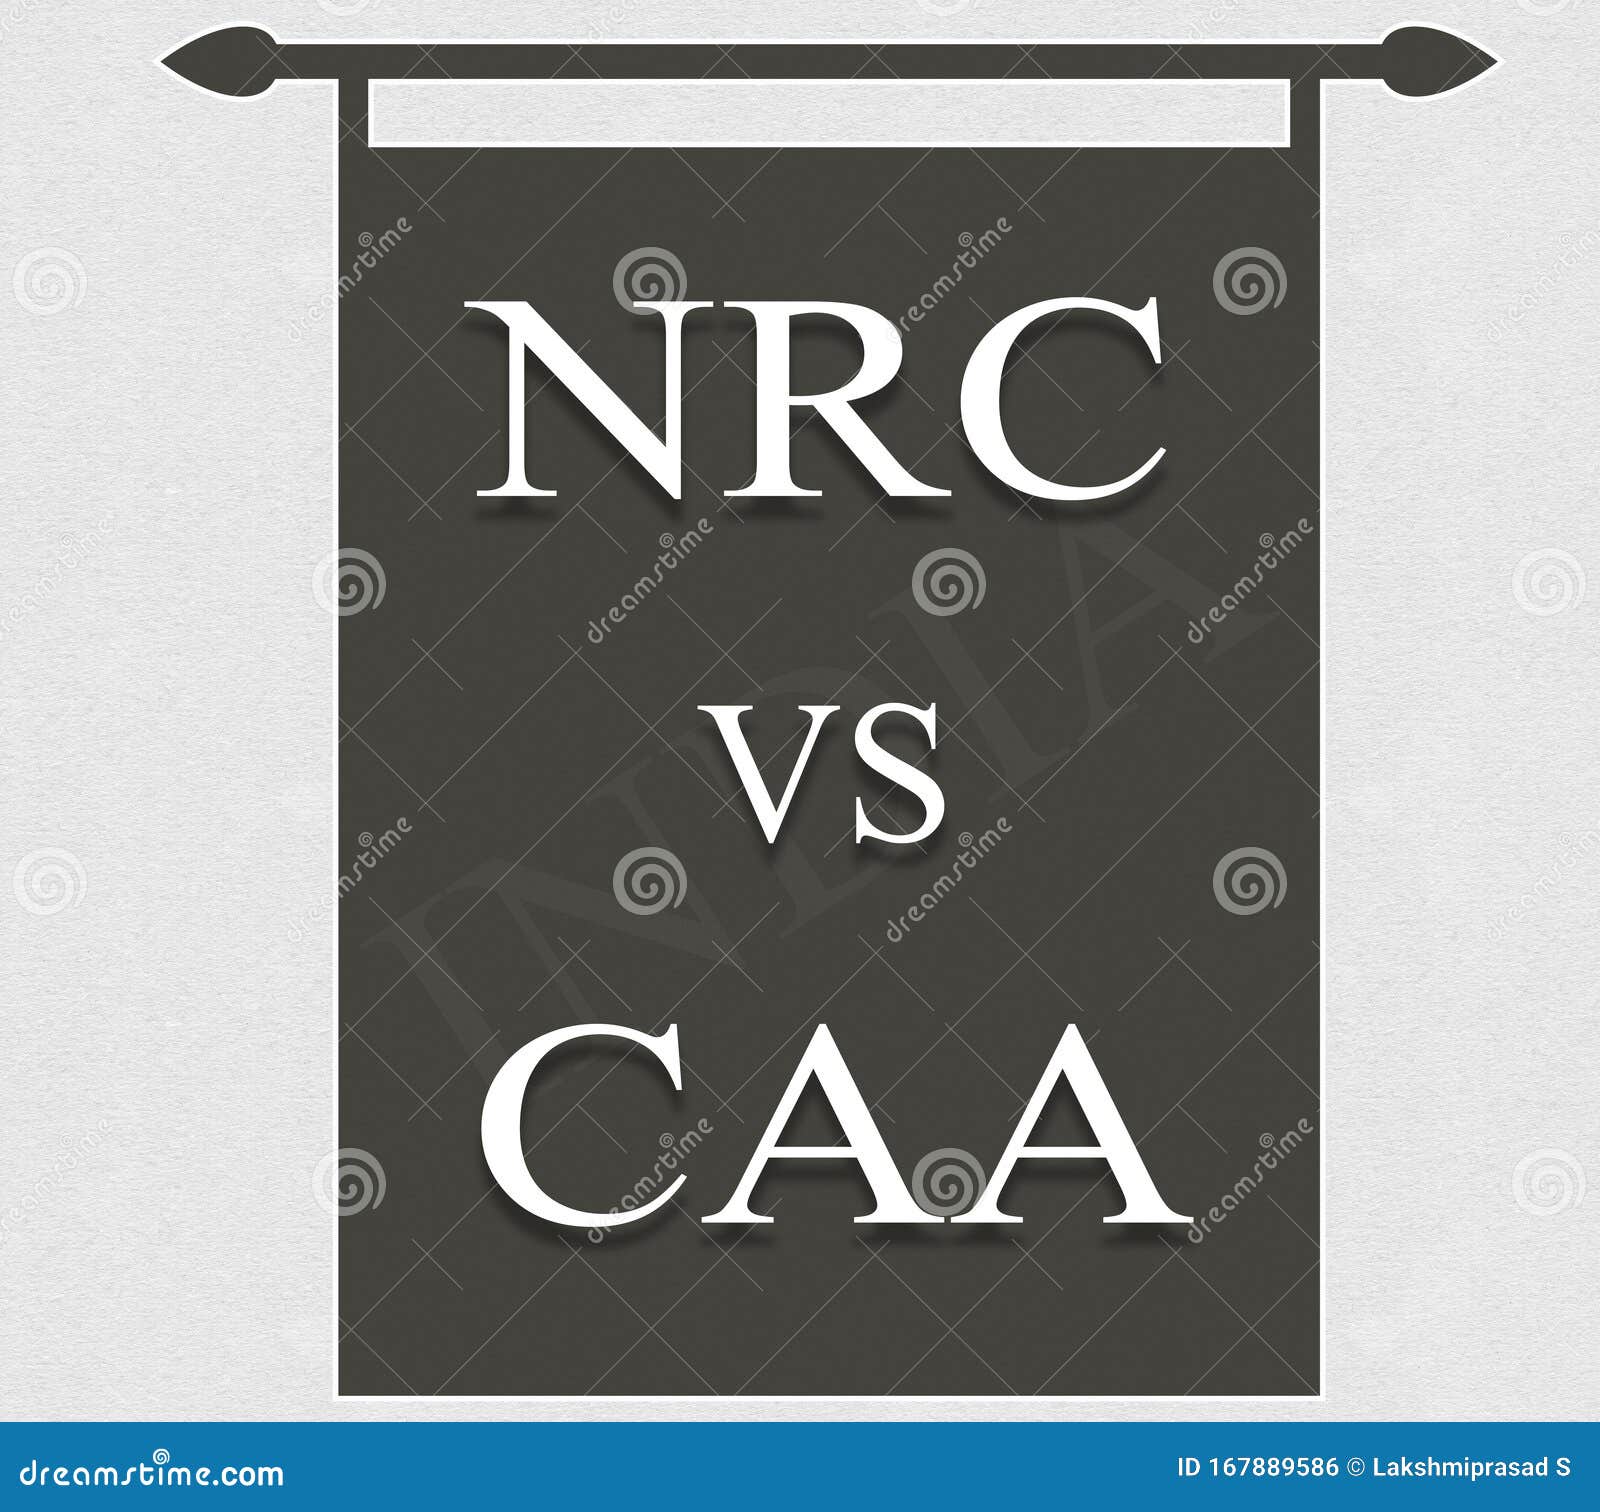 nrc vs caa showing on black banner.